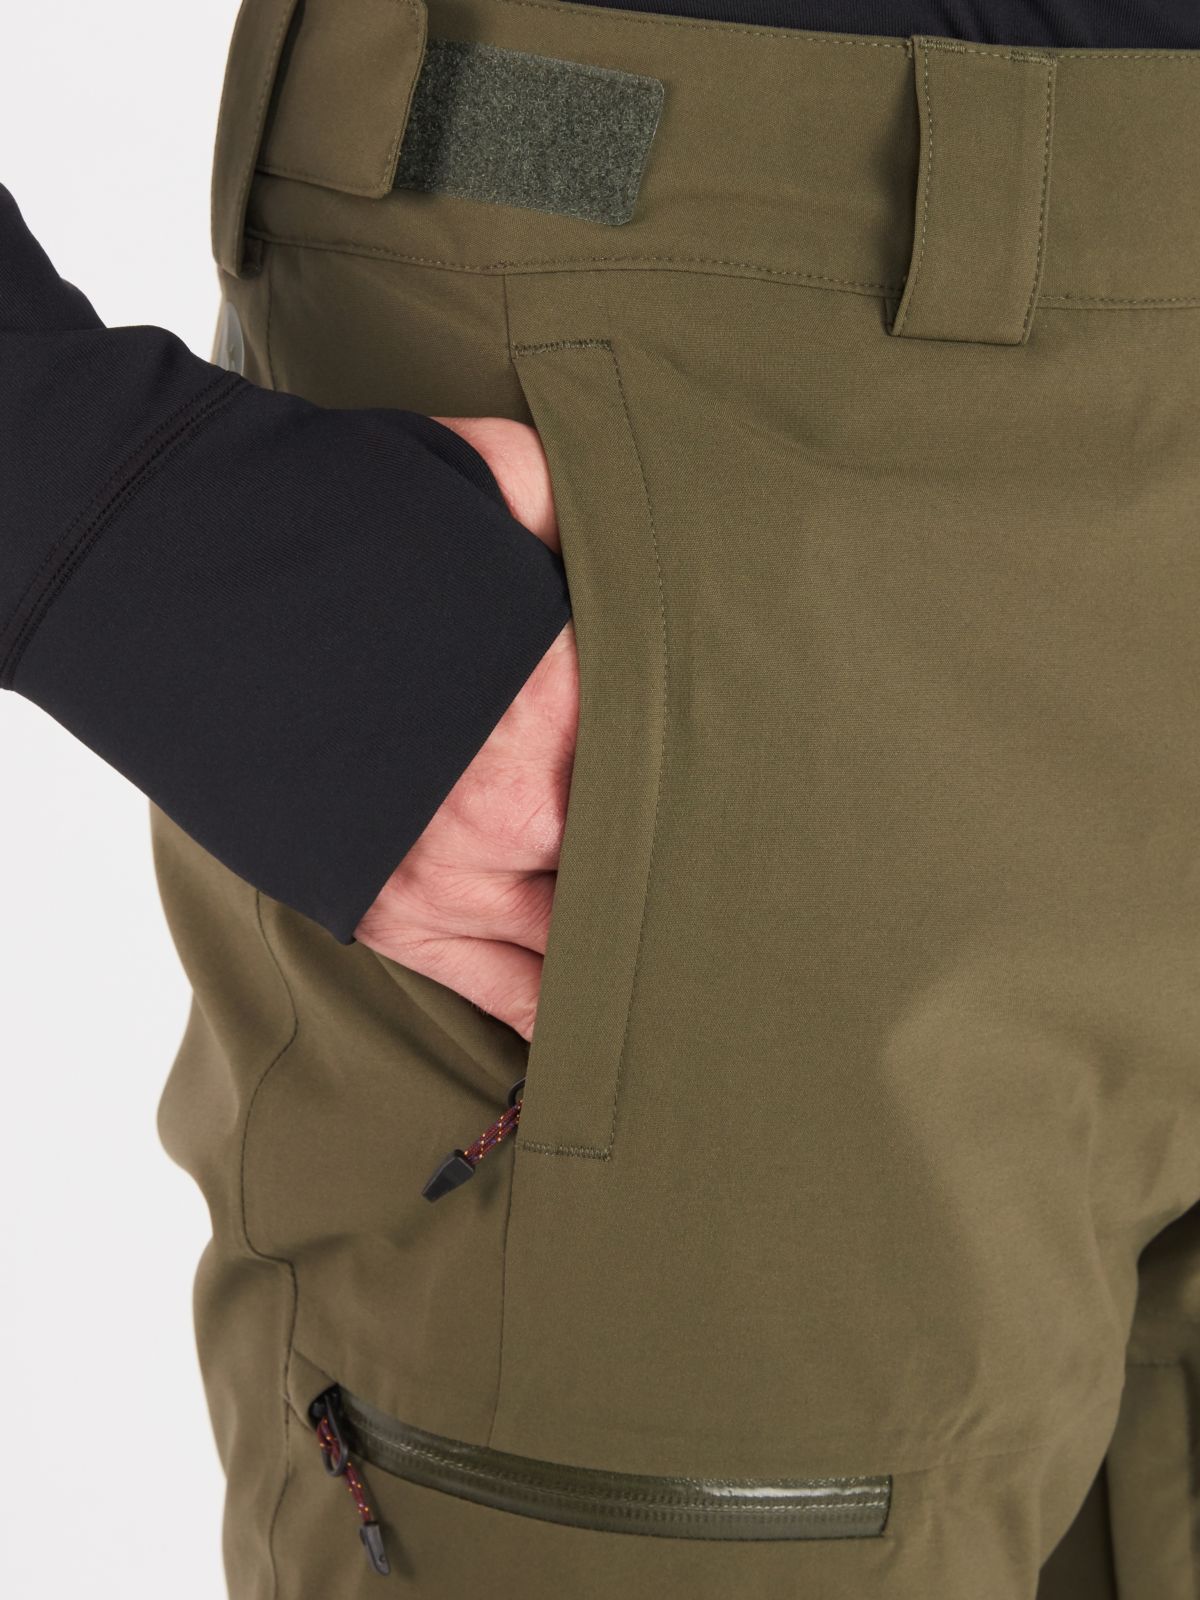 hand inside coat pocket